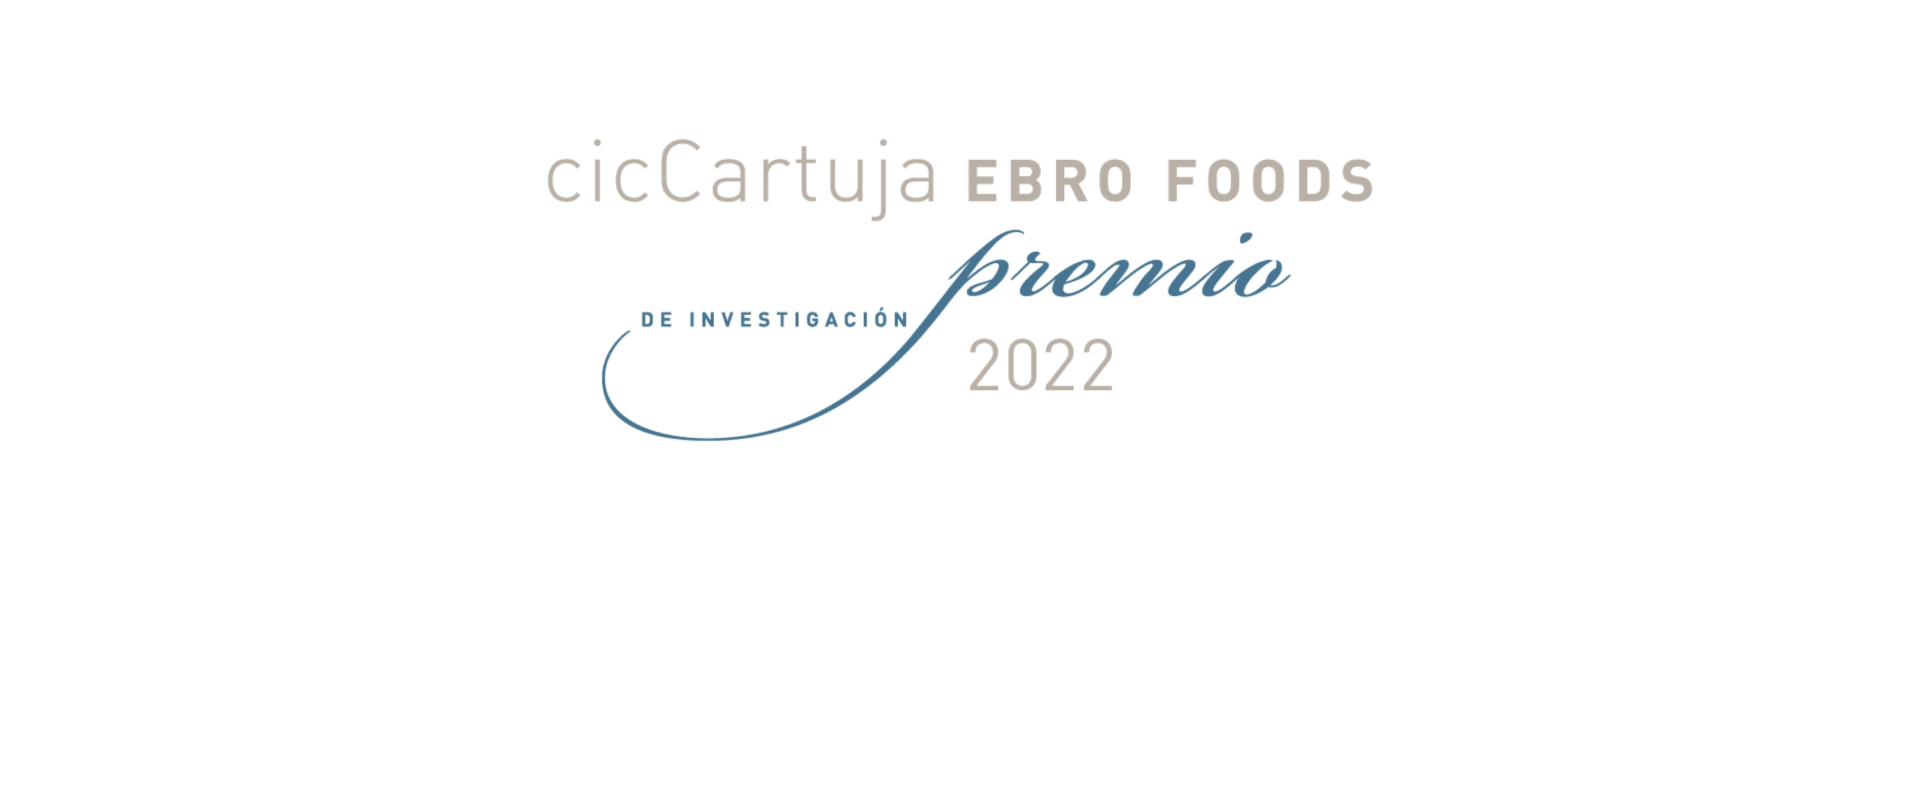 logo premios cicCartuja - Ebro Foods 2022